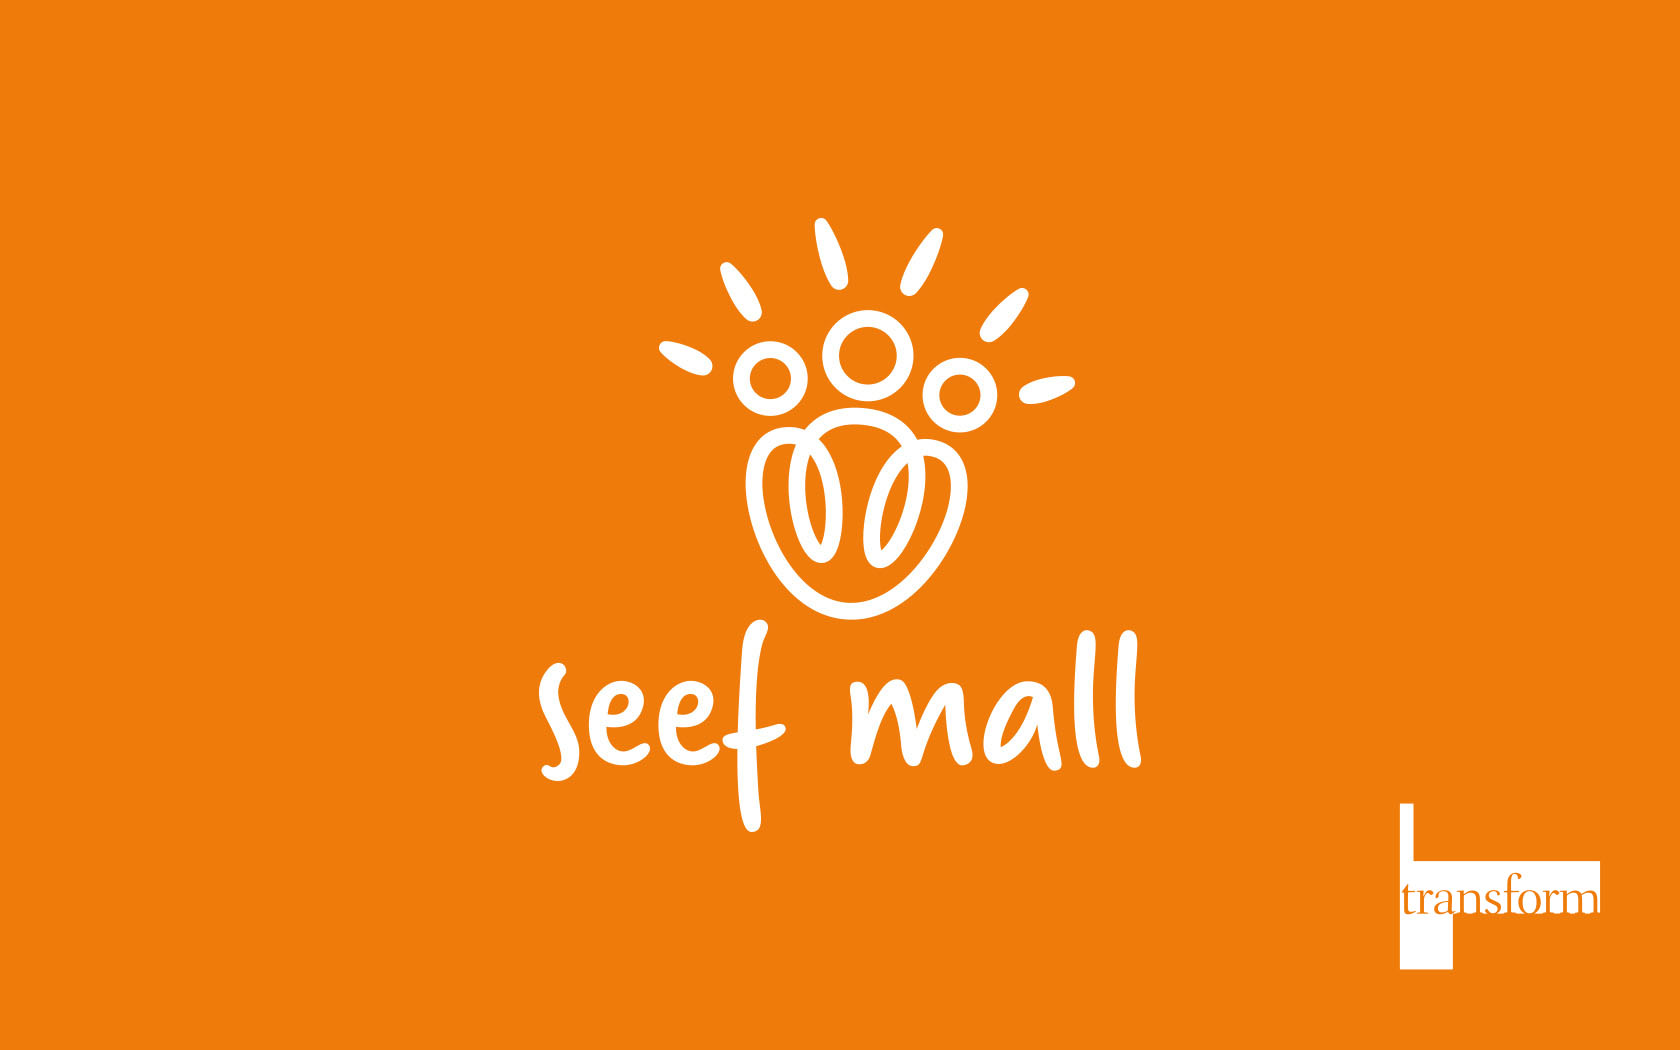 Seef Mall. Brand logo in white